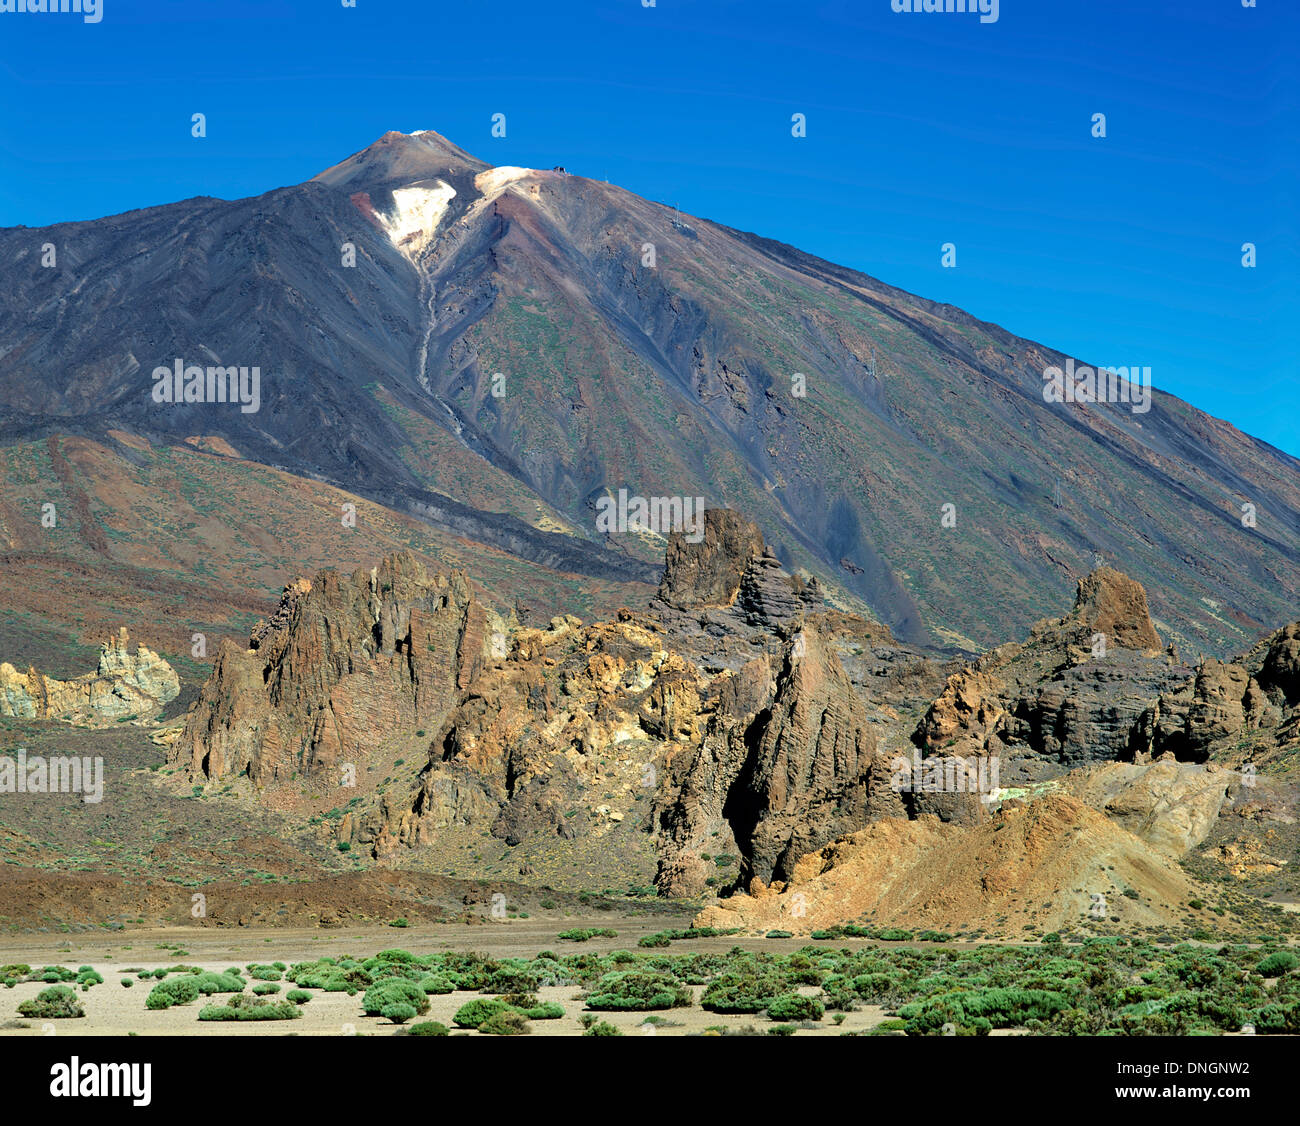 View of Mount Teide showing Caldera Las Canadas, Santa Cruz de Tenerife, Tenerife, Spain Stock Photo